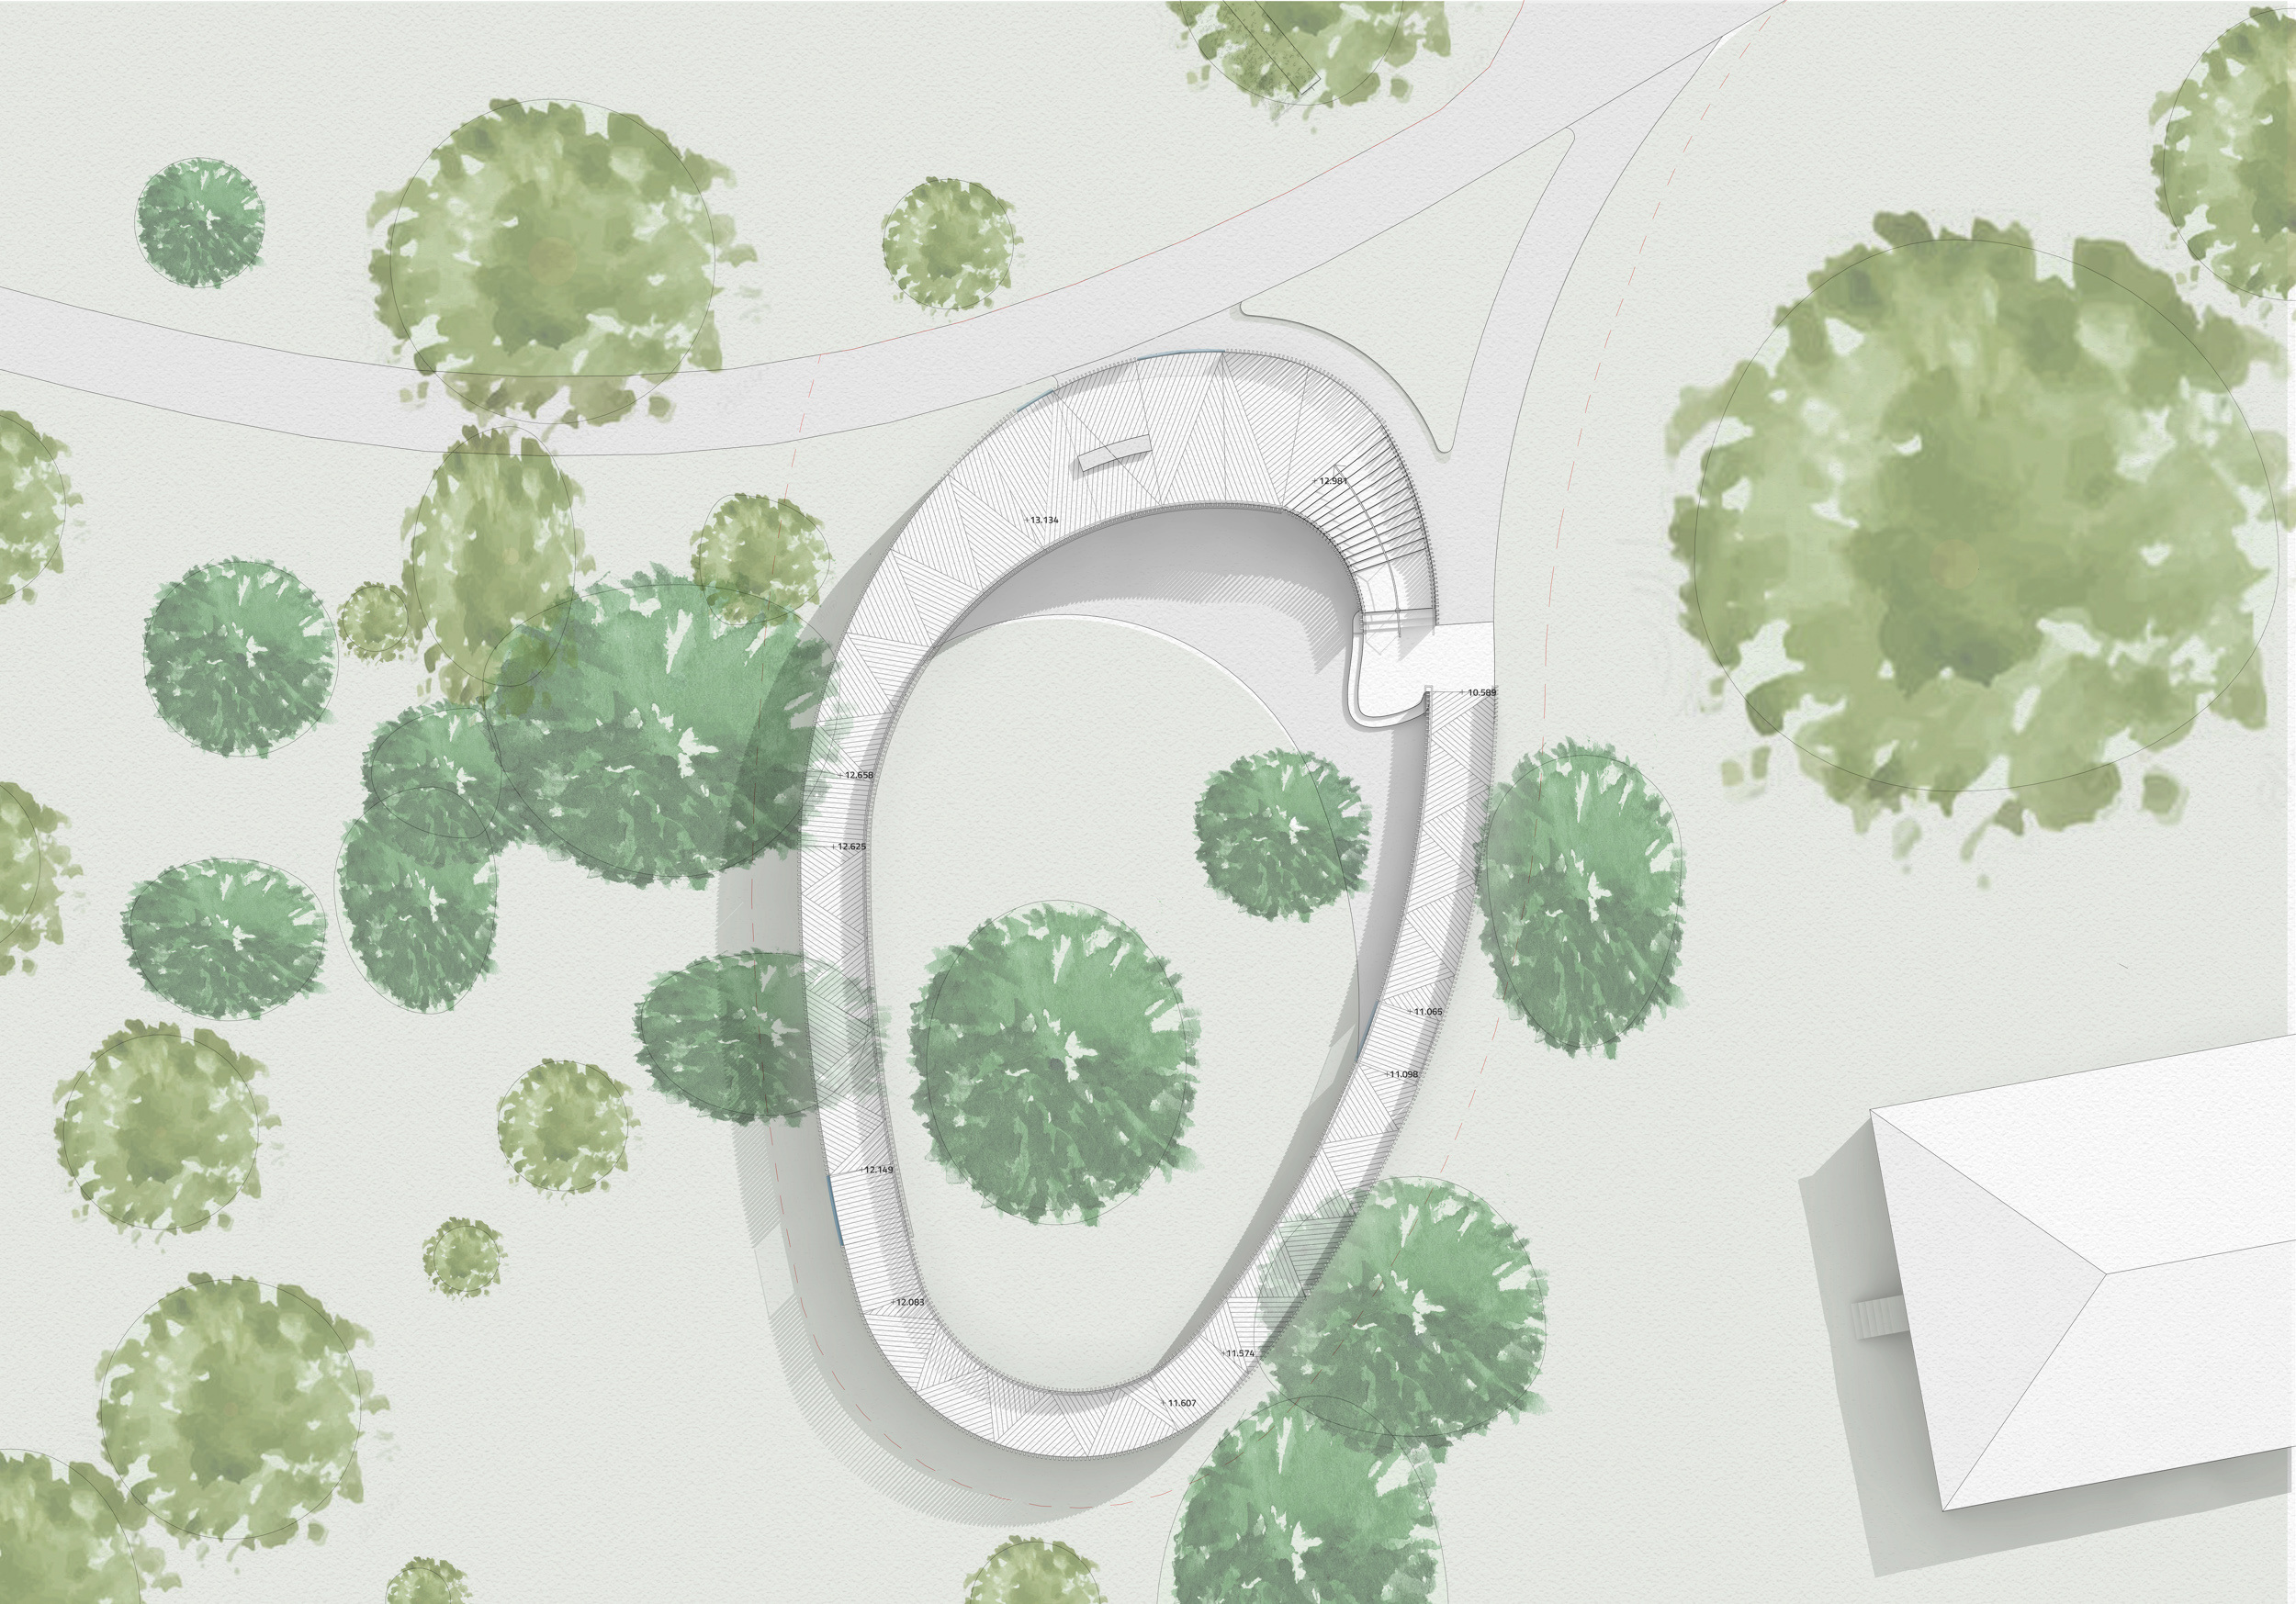 Plan drawing of the Cambridge University Botanic Garden Rising Path by architects CDC Studio